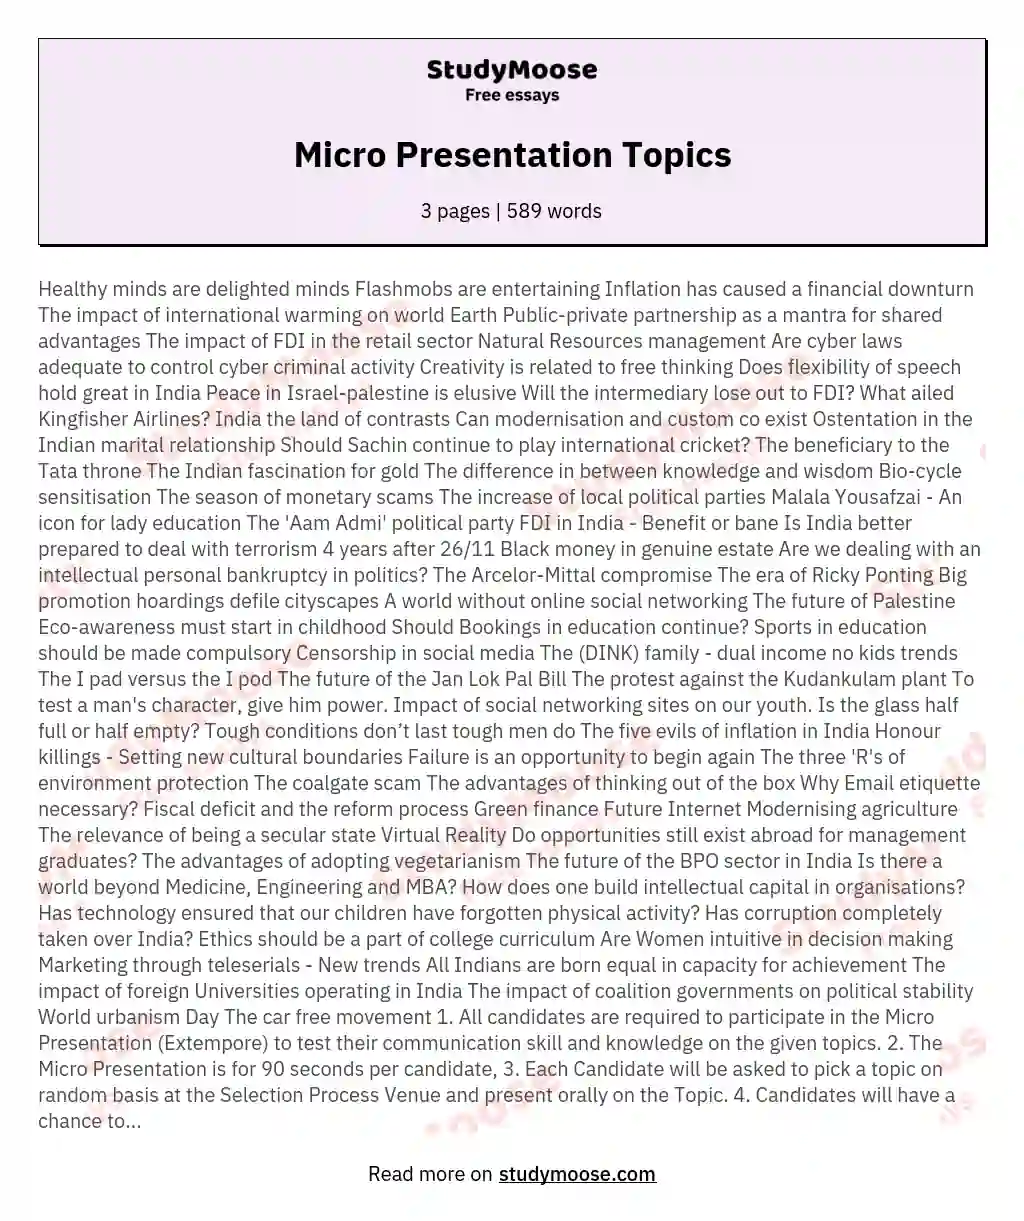 Micro Presentation Topics essay